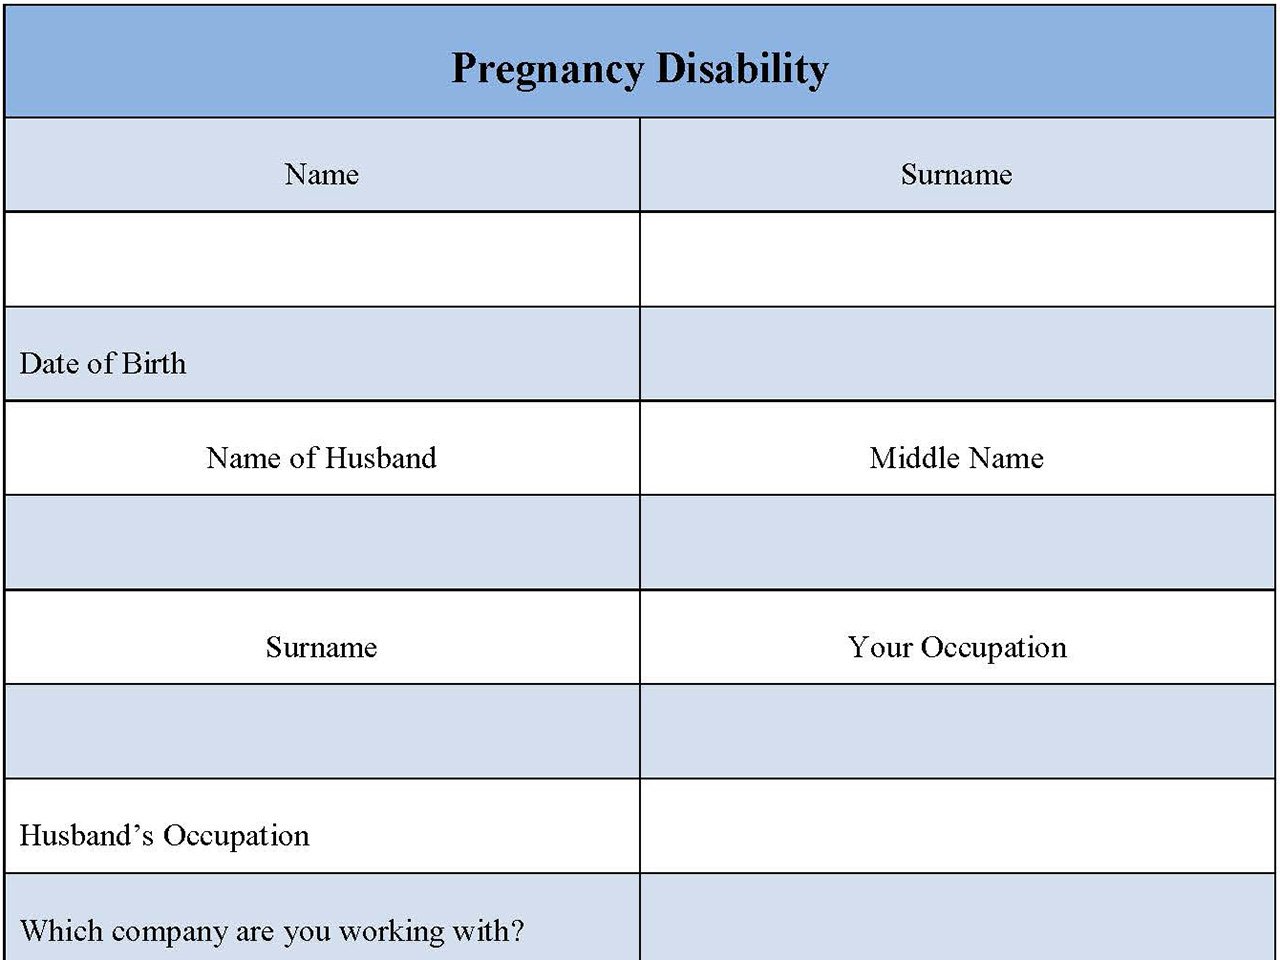 Pregnancy Disability Form